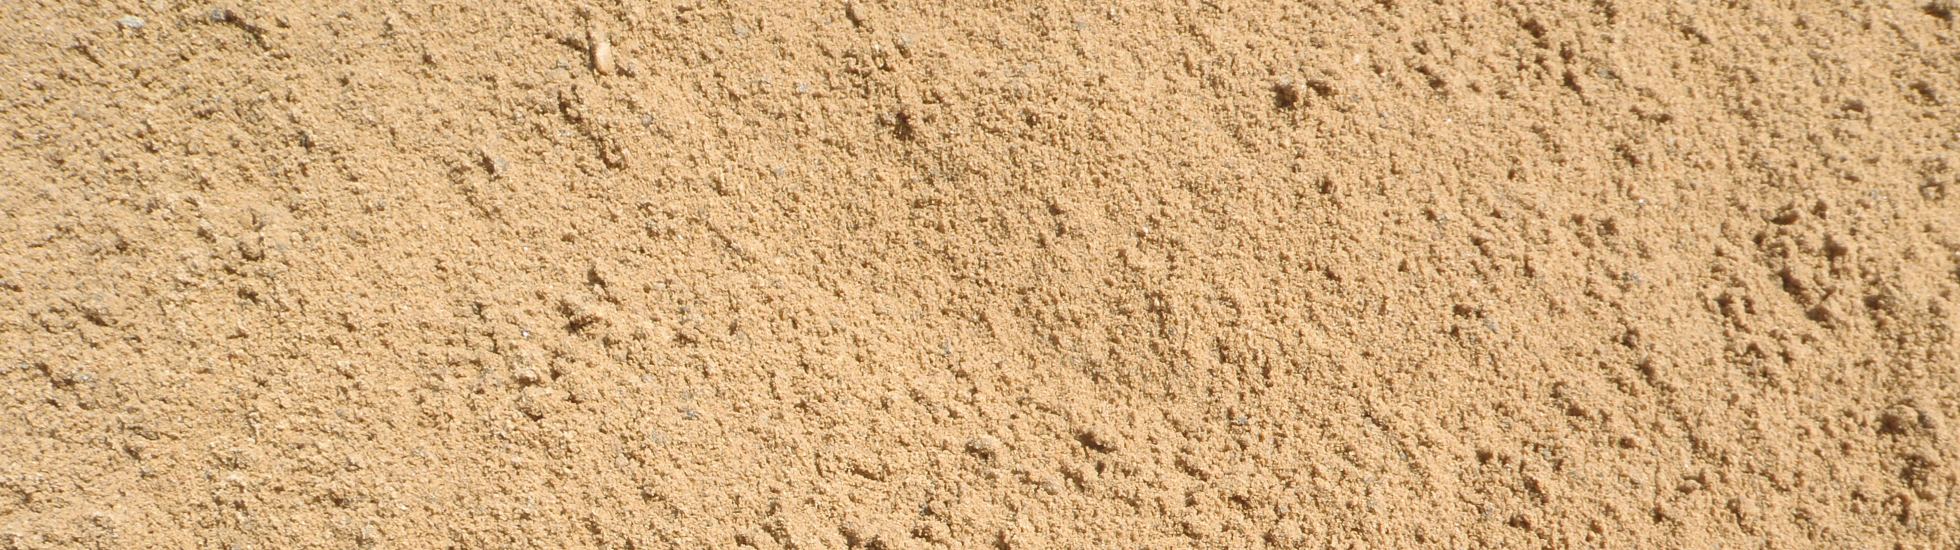 ZANDBESTELLEN - Bestrating zand bestellen den